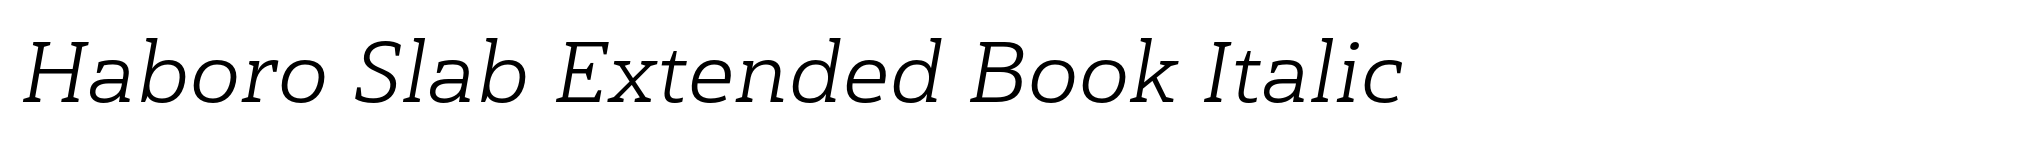 Haboro Slab Extended Book Italic image